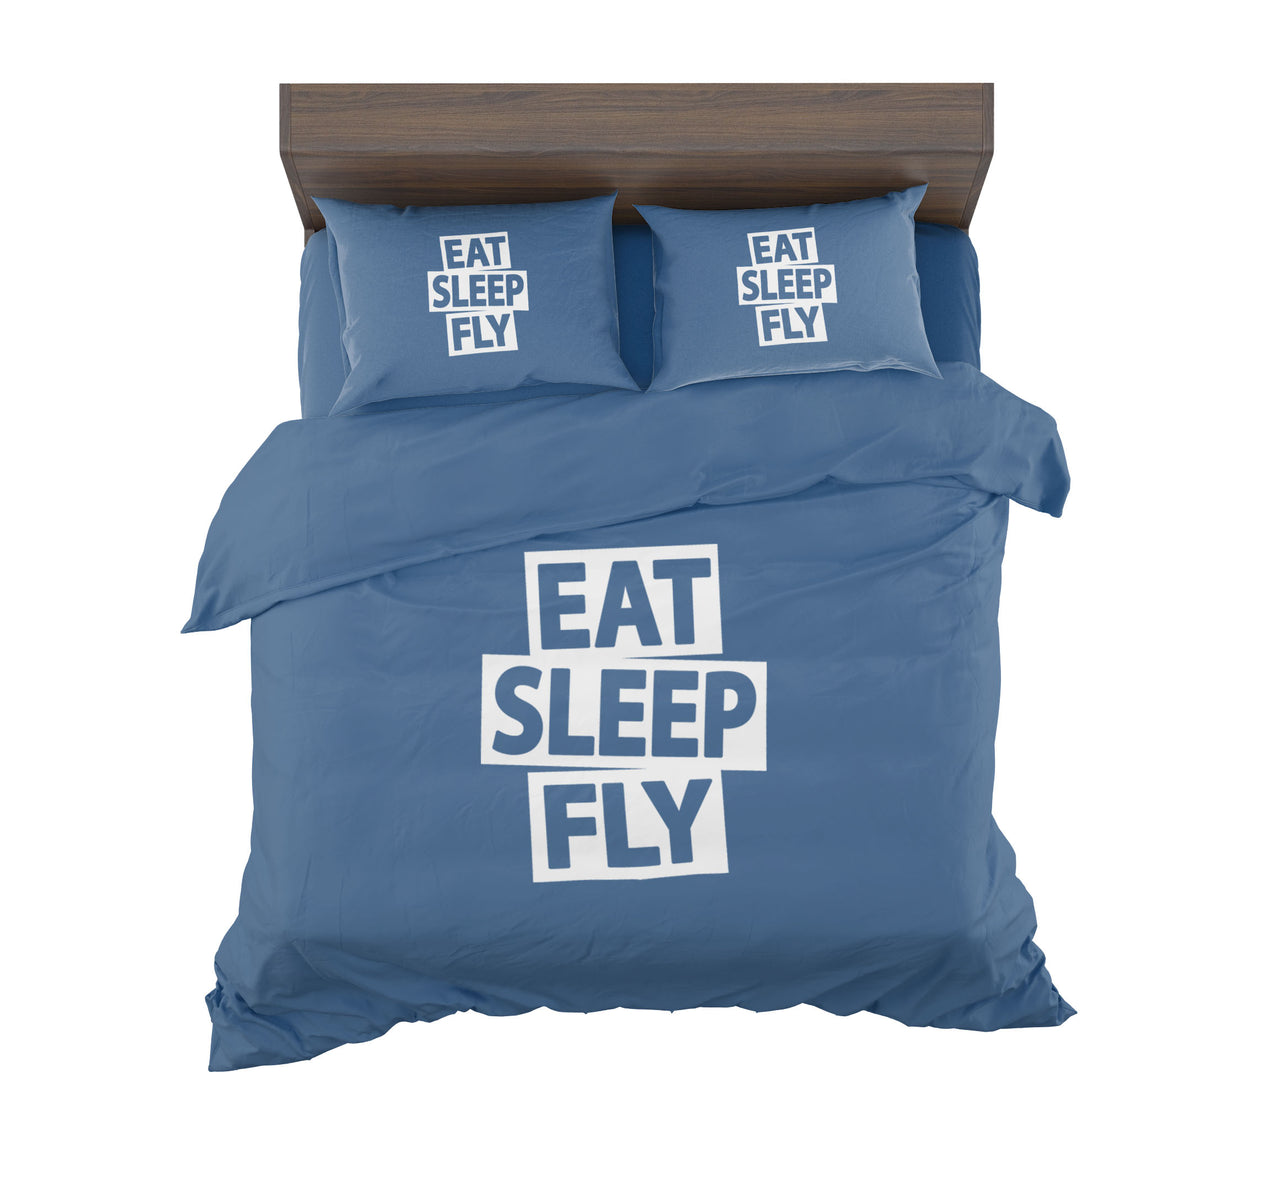 Eat Sleep Fly Designed Bedding Sets